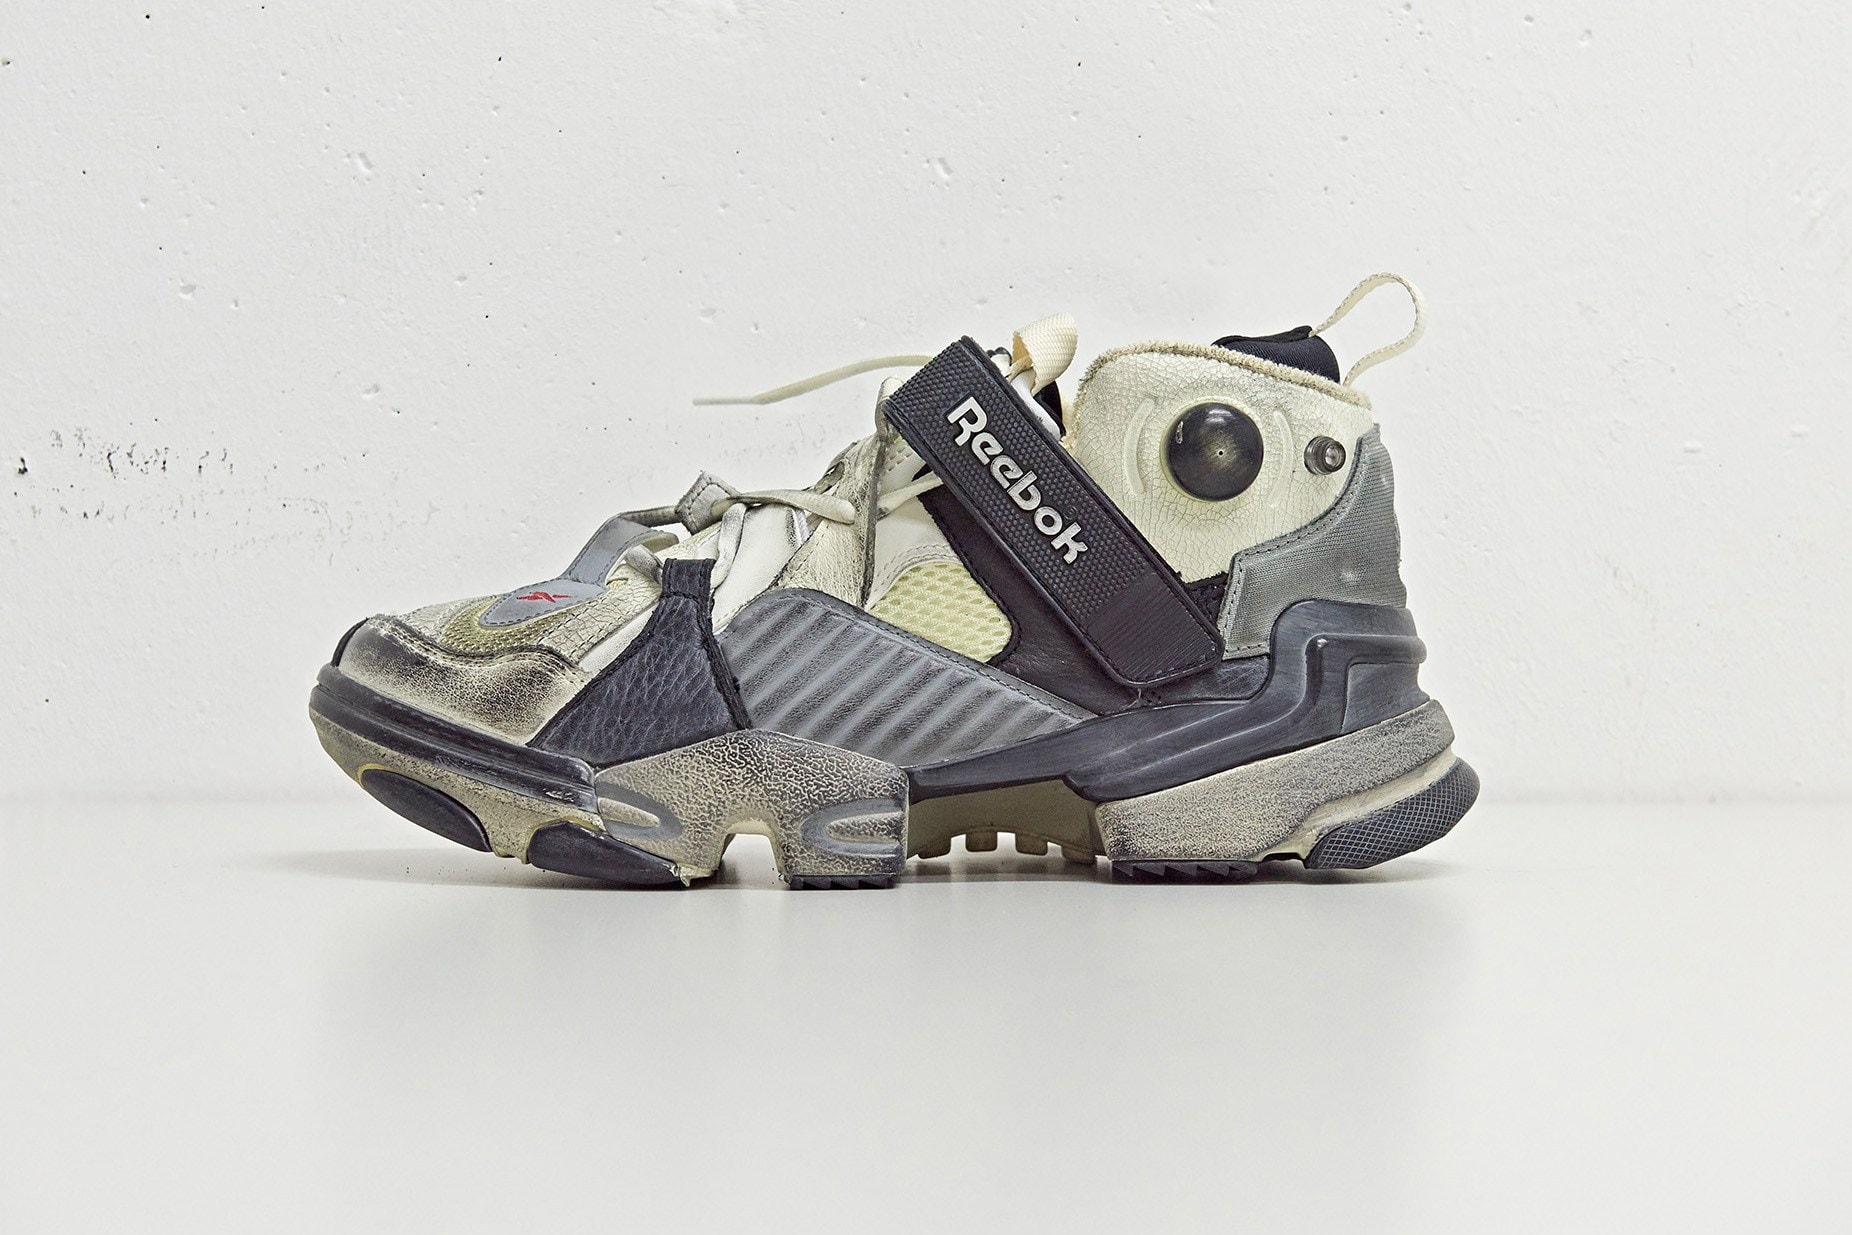 Vetements x Reebok Genetically Modified Sneaker 10 Corso Como Exclusive |  Hypebeast